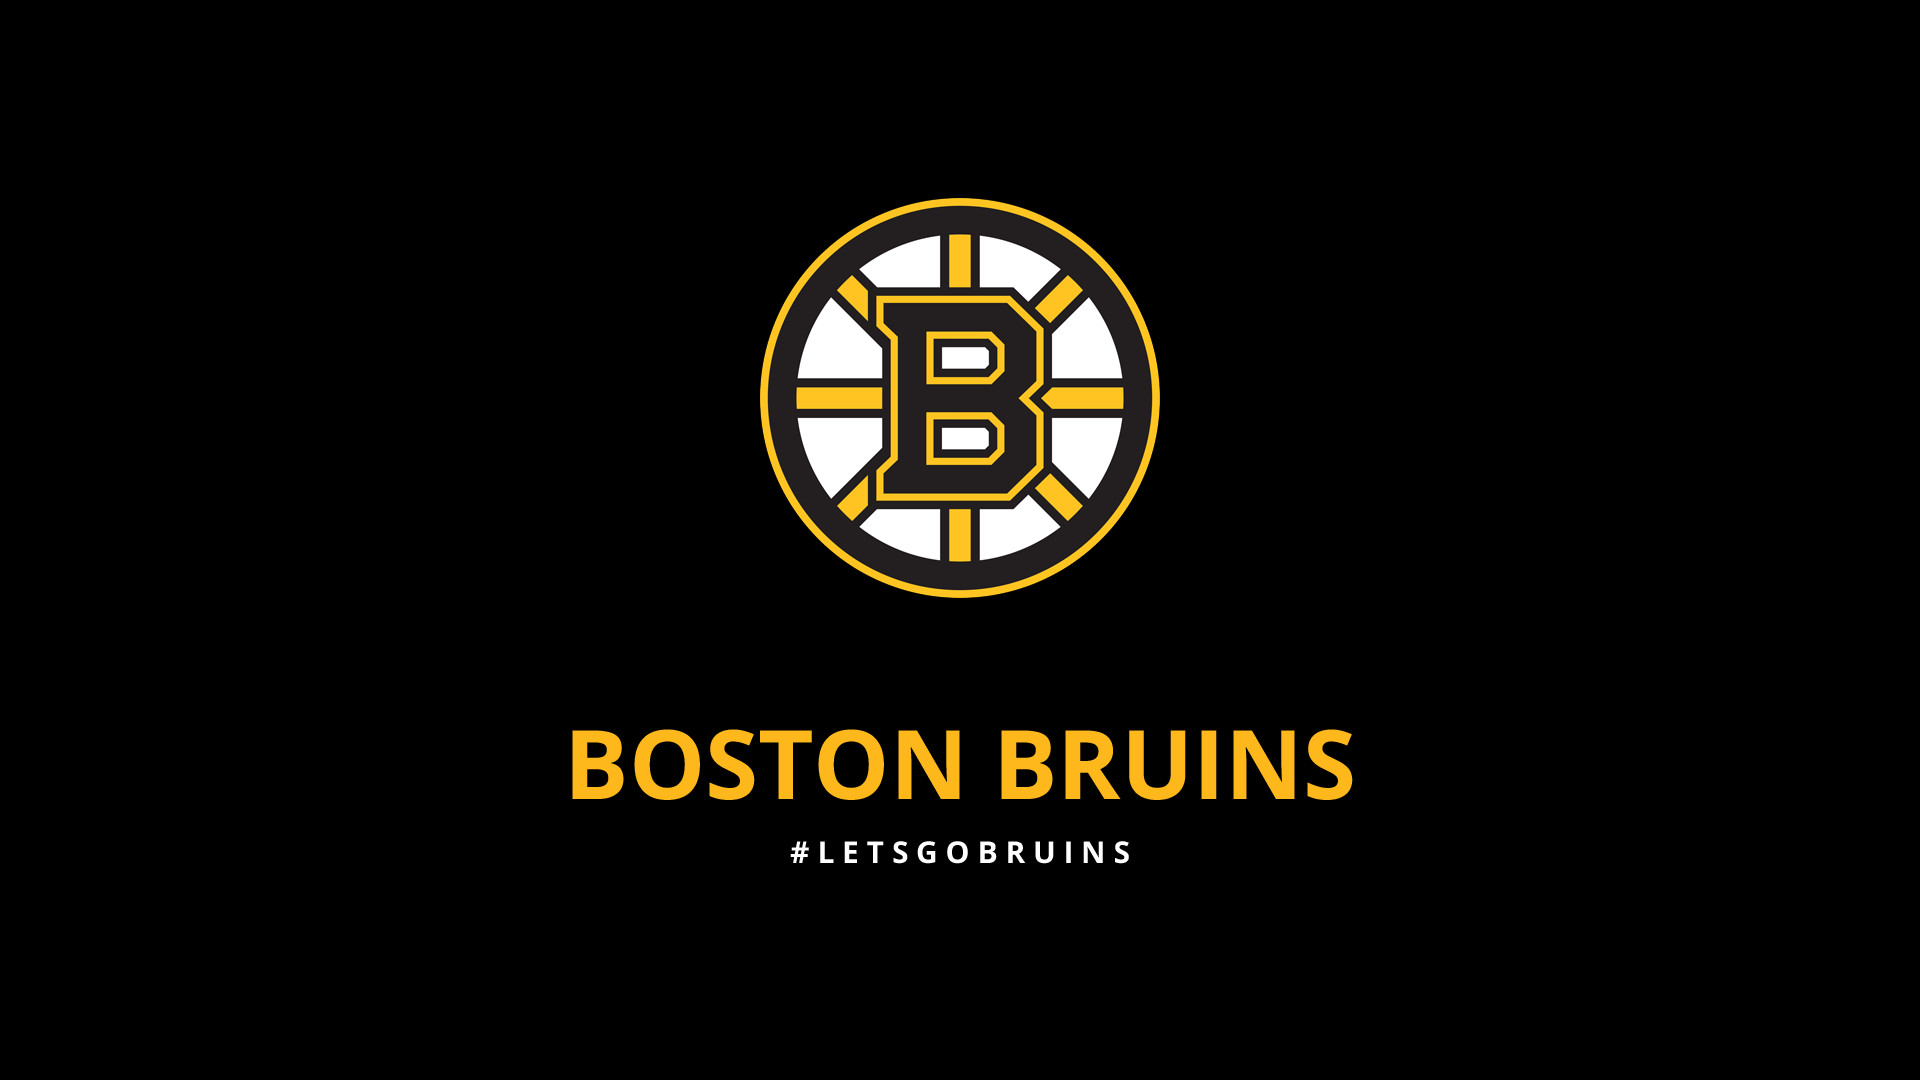 1920x1080 Boston Bruins Wallpapers - Wallpaper Cave